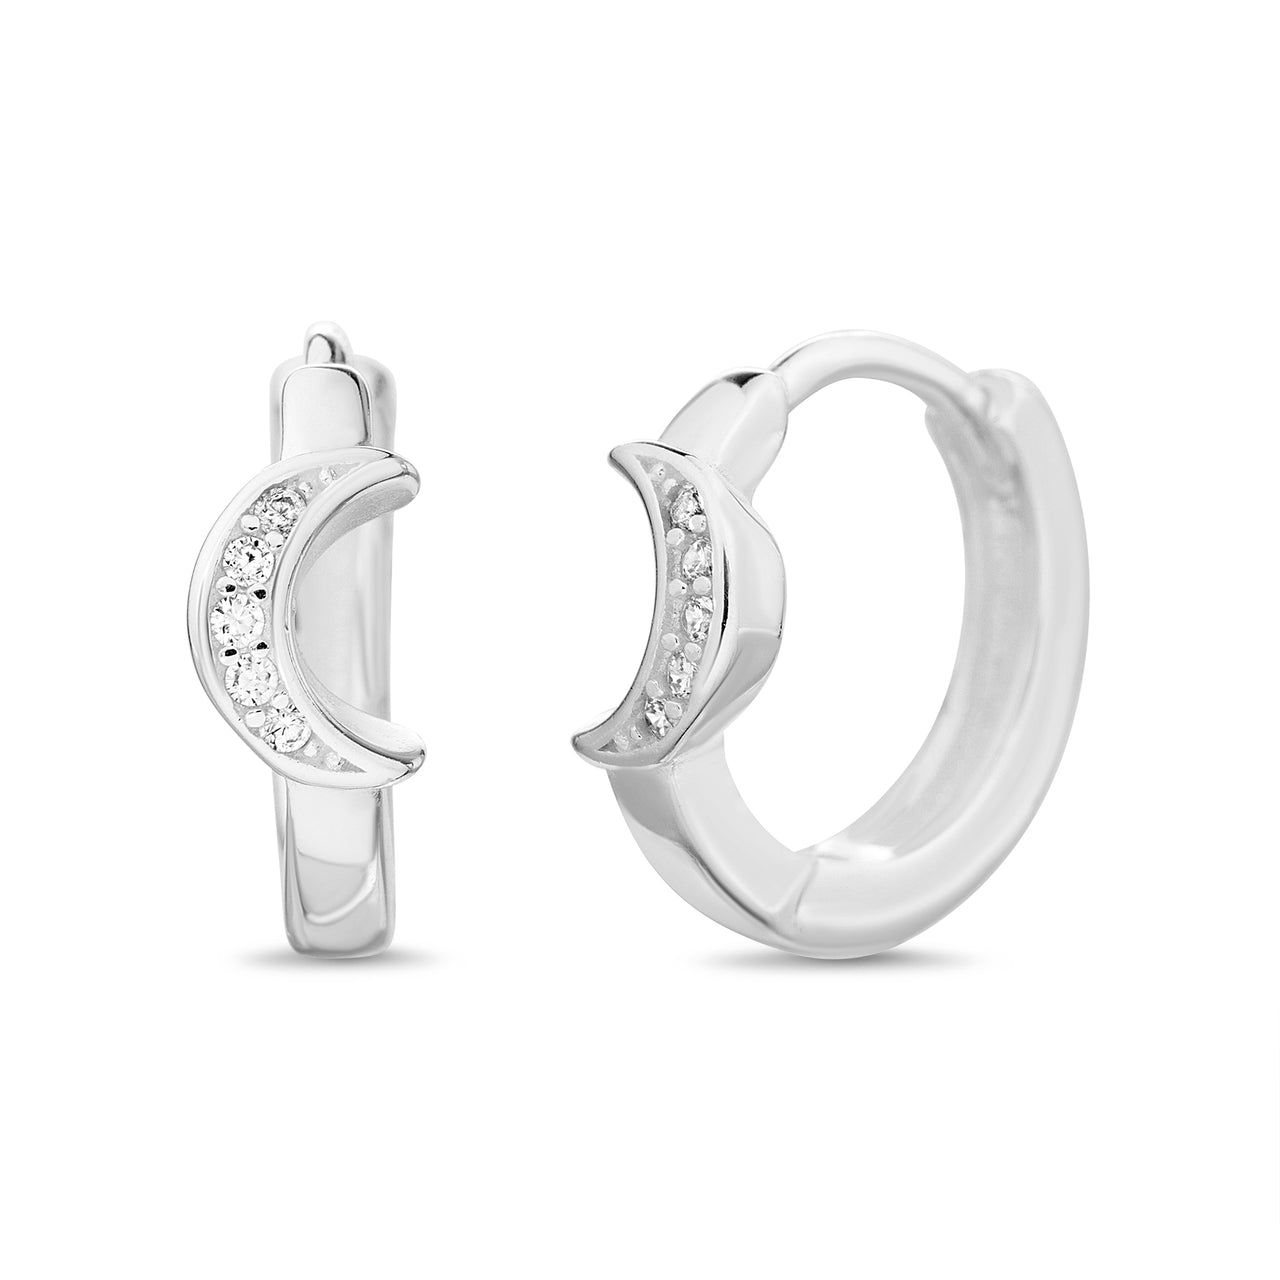 Lesa Michele Sterling Silver Cubic Zirconia Crescent Moon Hoop Earrings